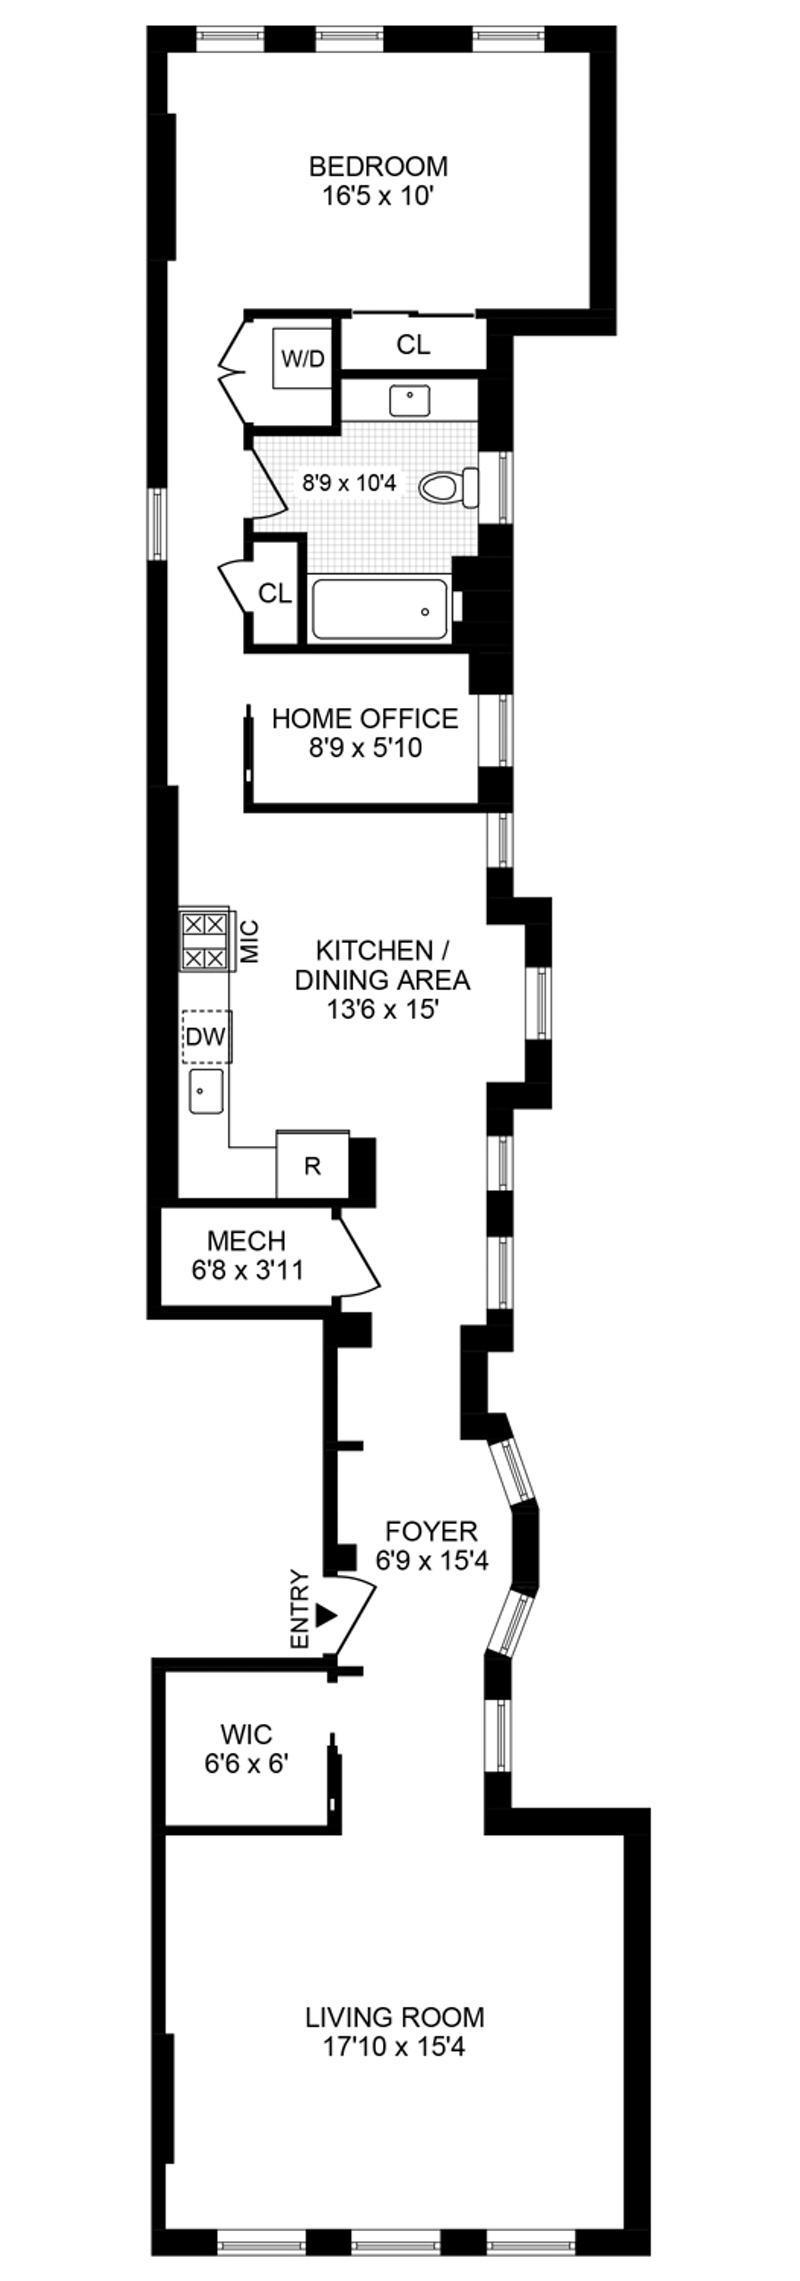 Floorplan for 24 West 131st Street, 5